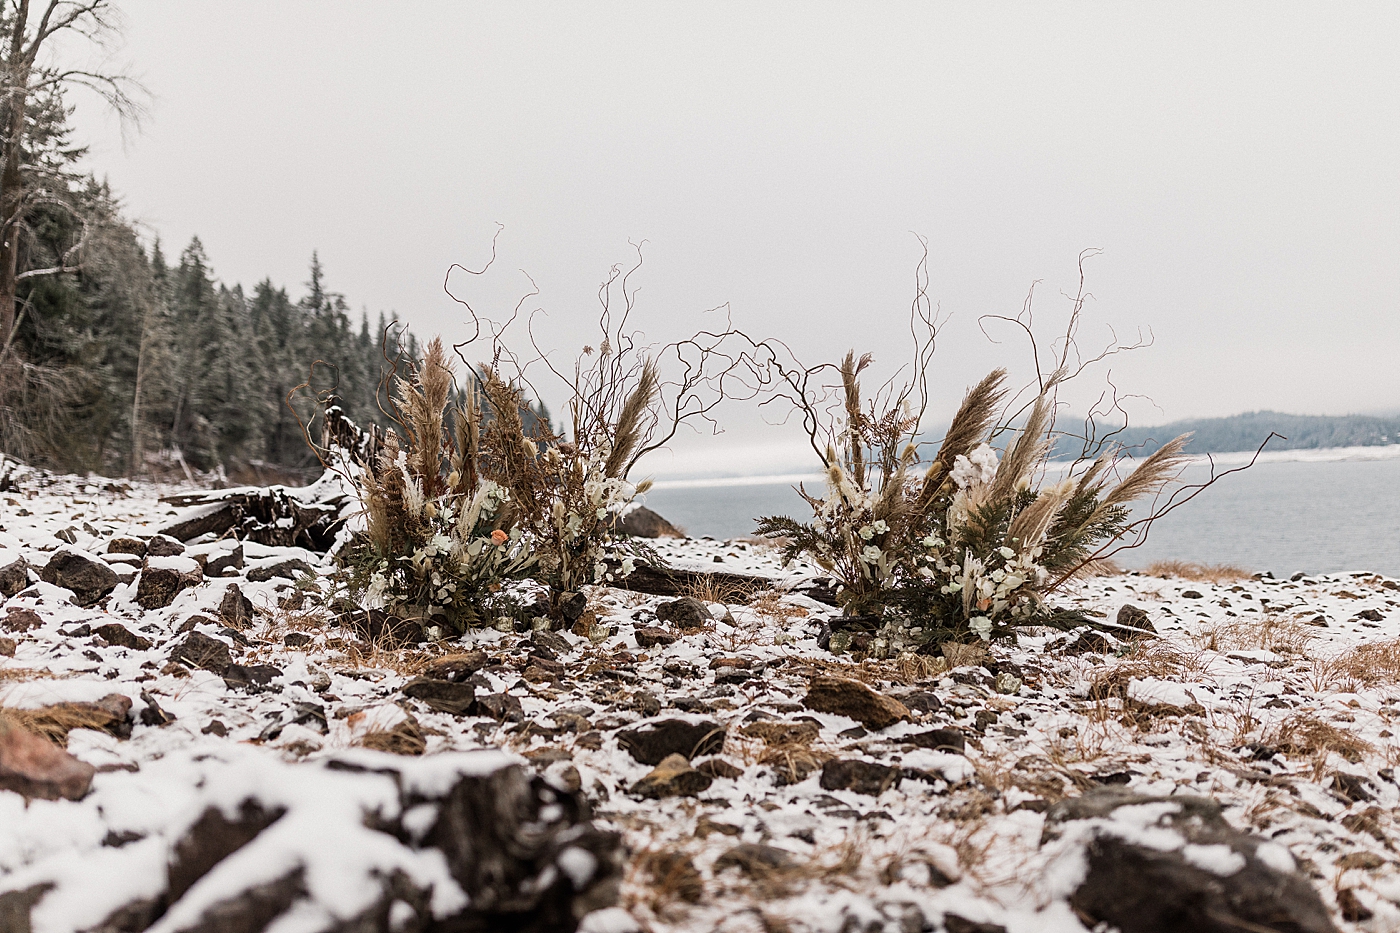 Lake Kachess with snow | Megan Montalvo Photography